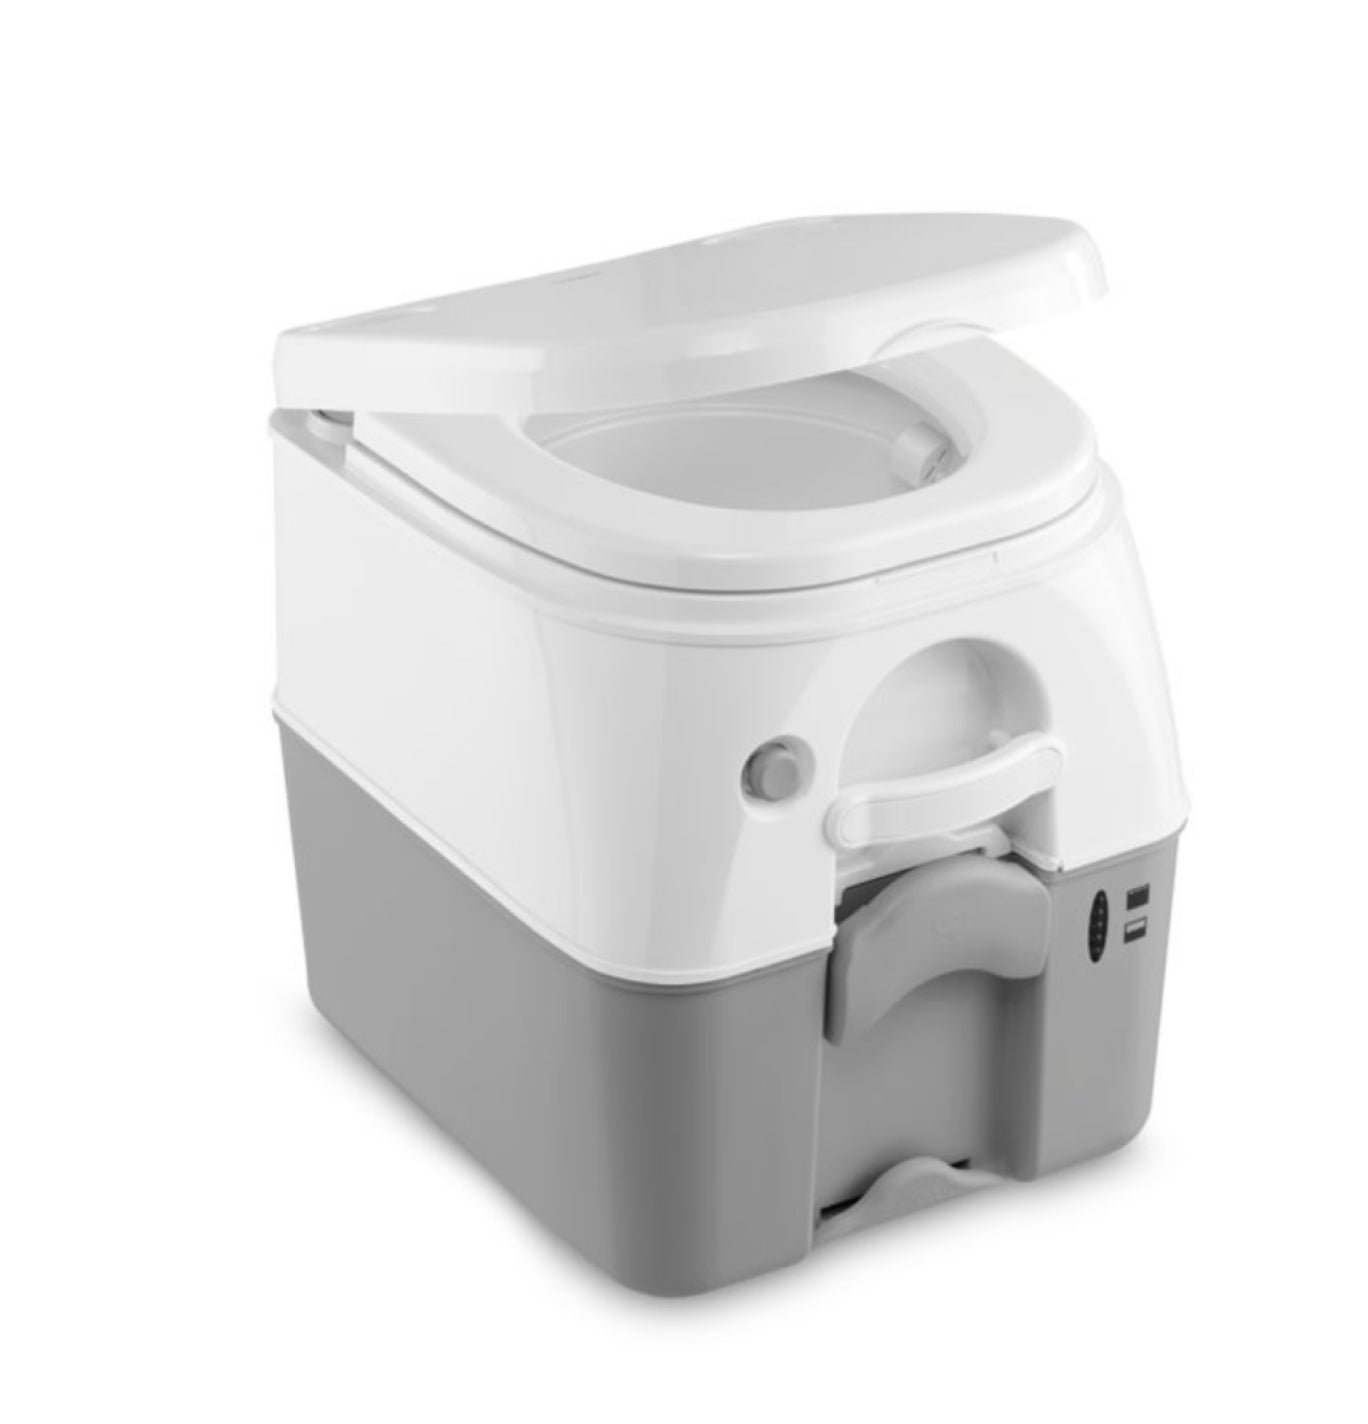 Dometic 976G Portable Toilet & GreenCare Eco Friendly Tabs Bundle Image